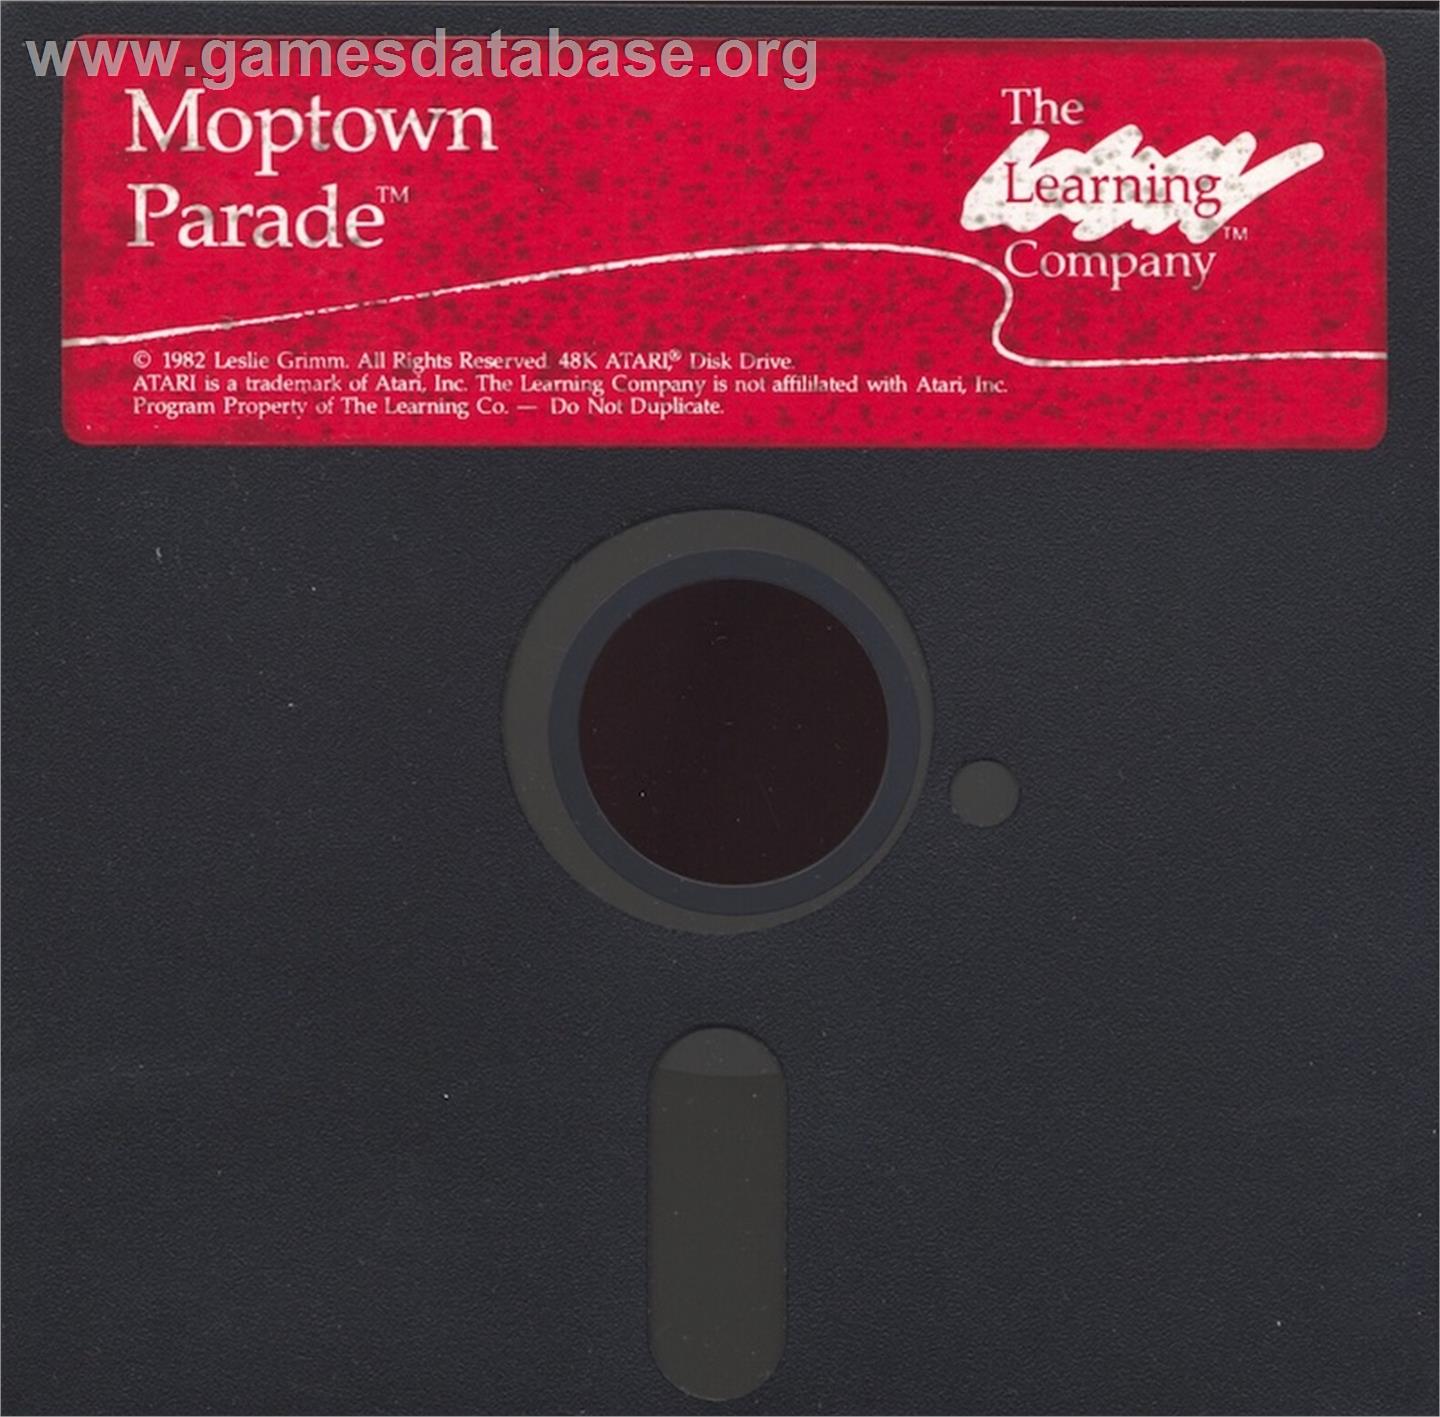 Moptown Parade - Microsoft DOS - Artwork - Disc